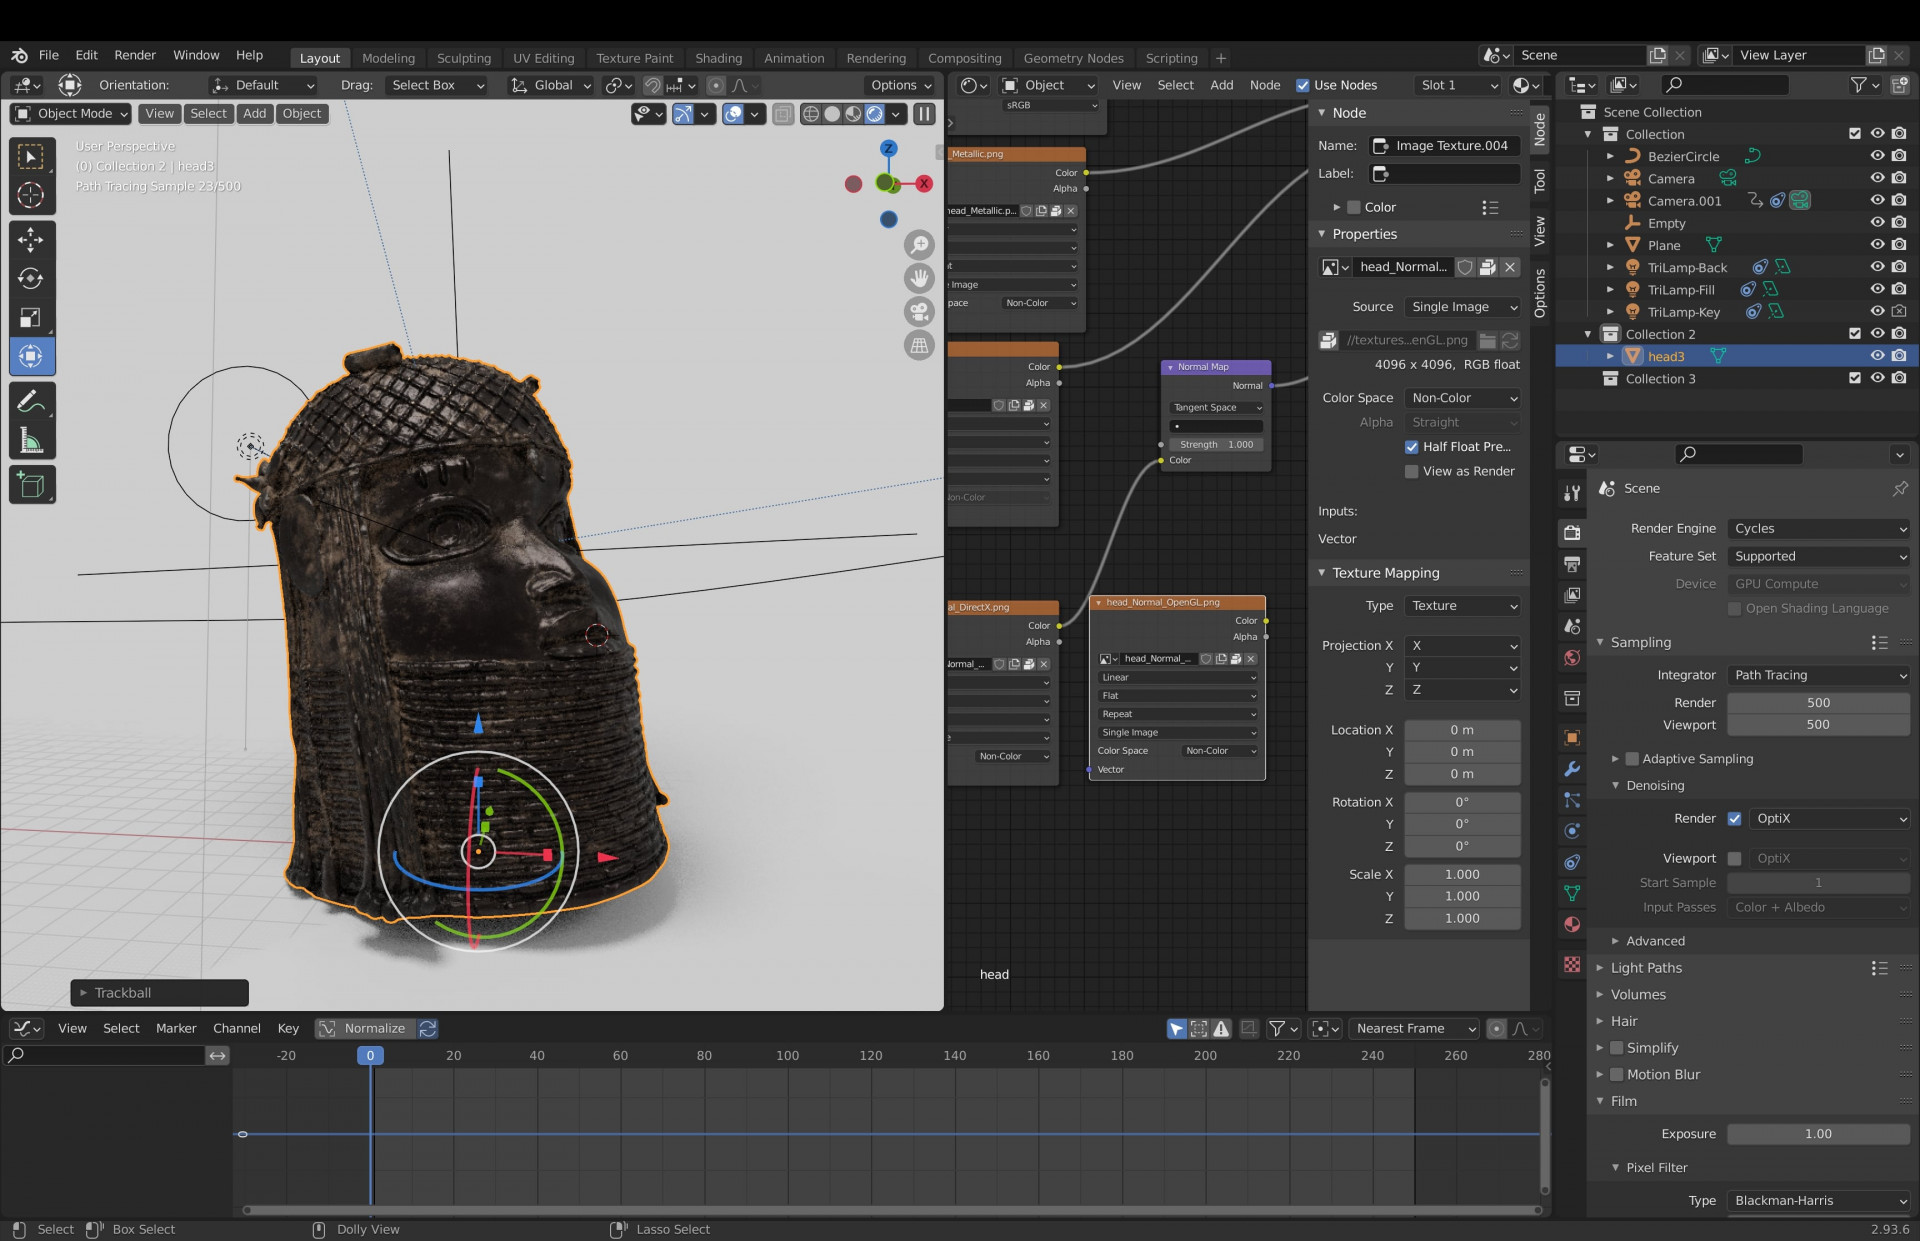 A screenshot showing a Benin Bronze head sculpture being animated using a 3D graphics software tool